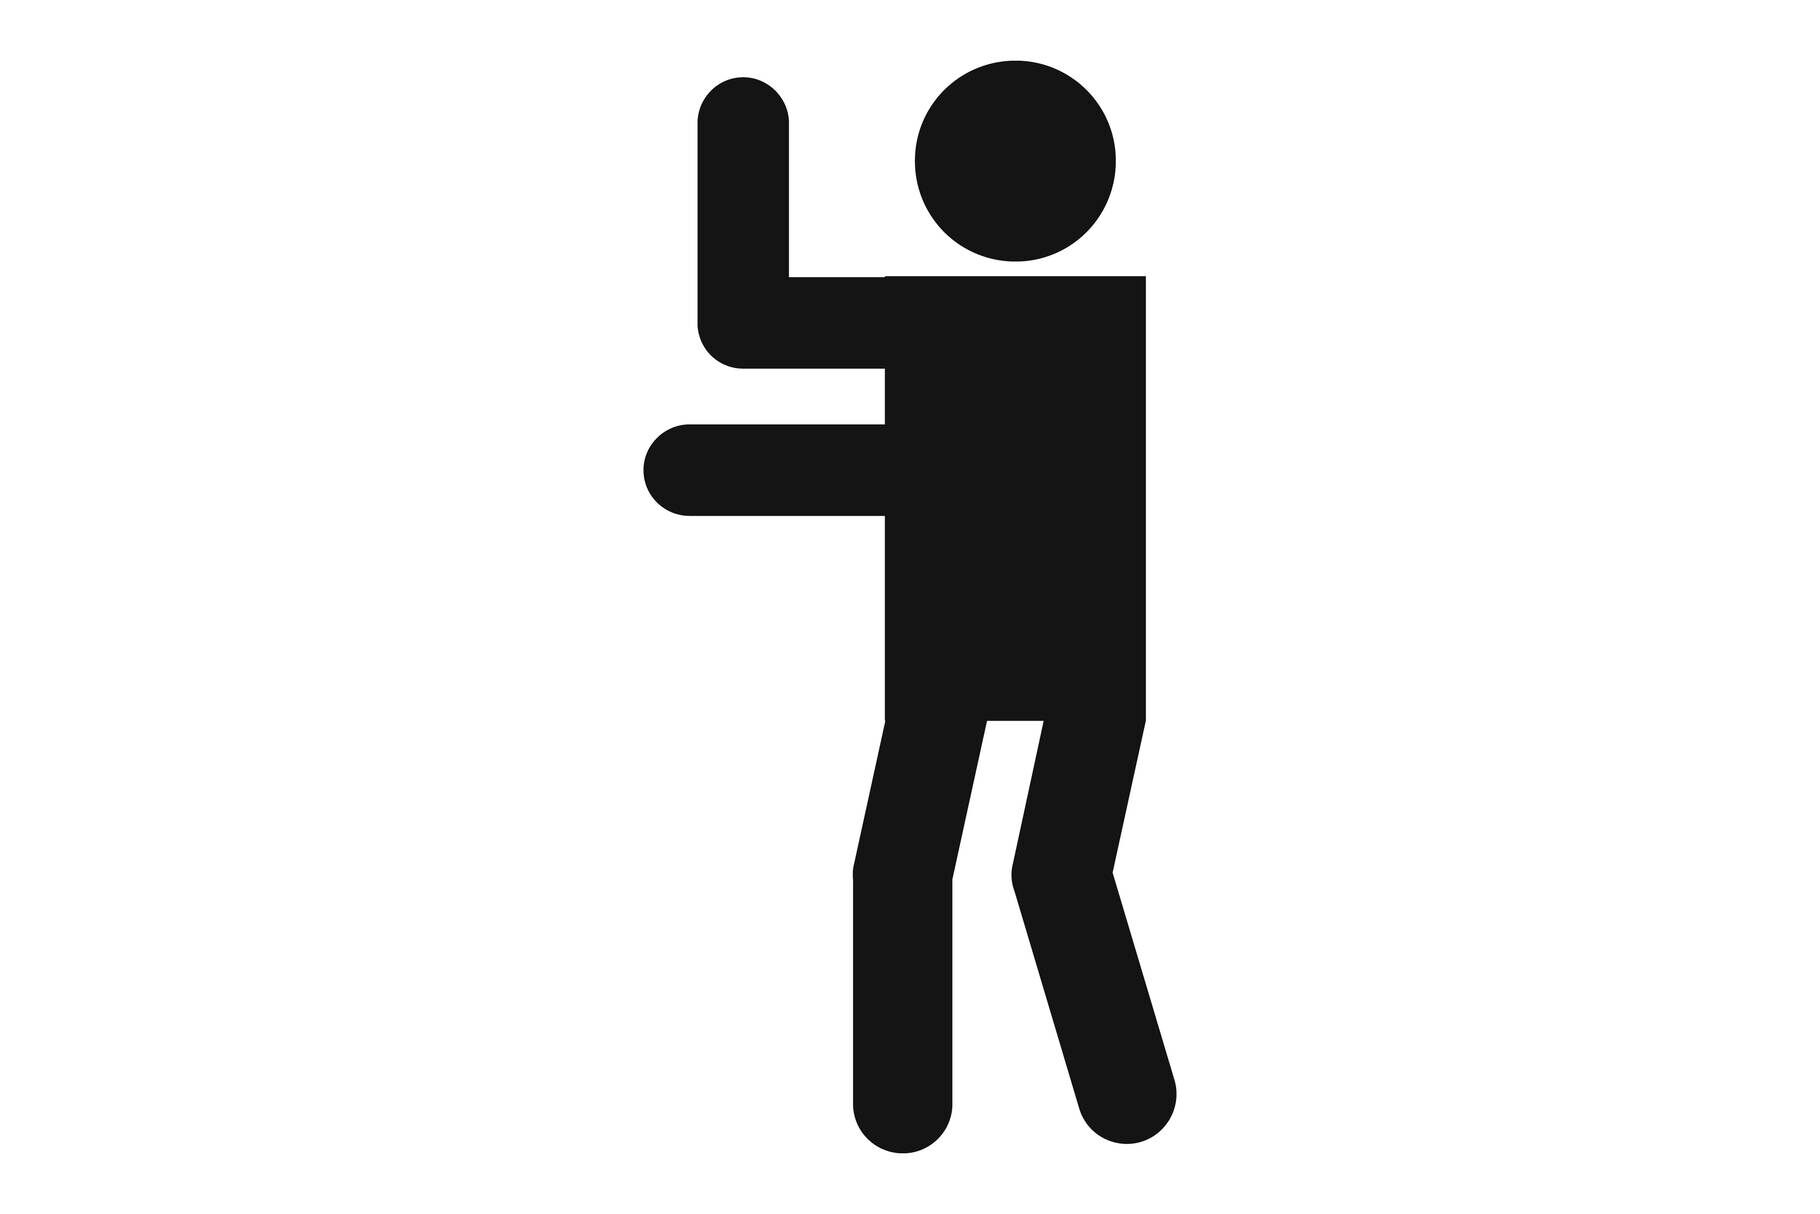 Stick figure stickman icon pictogram vector simple By Anatolir56 ...